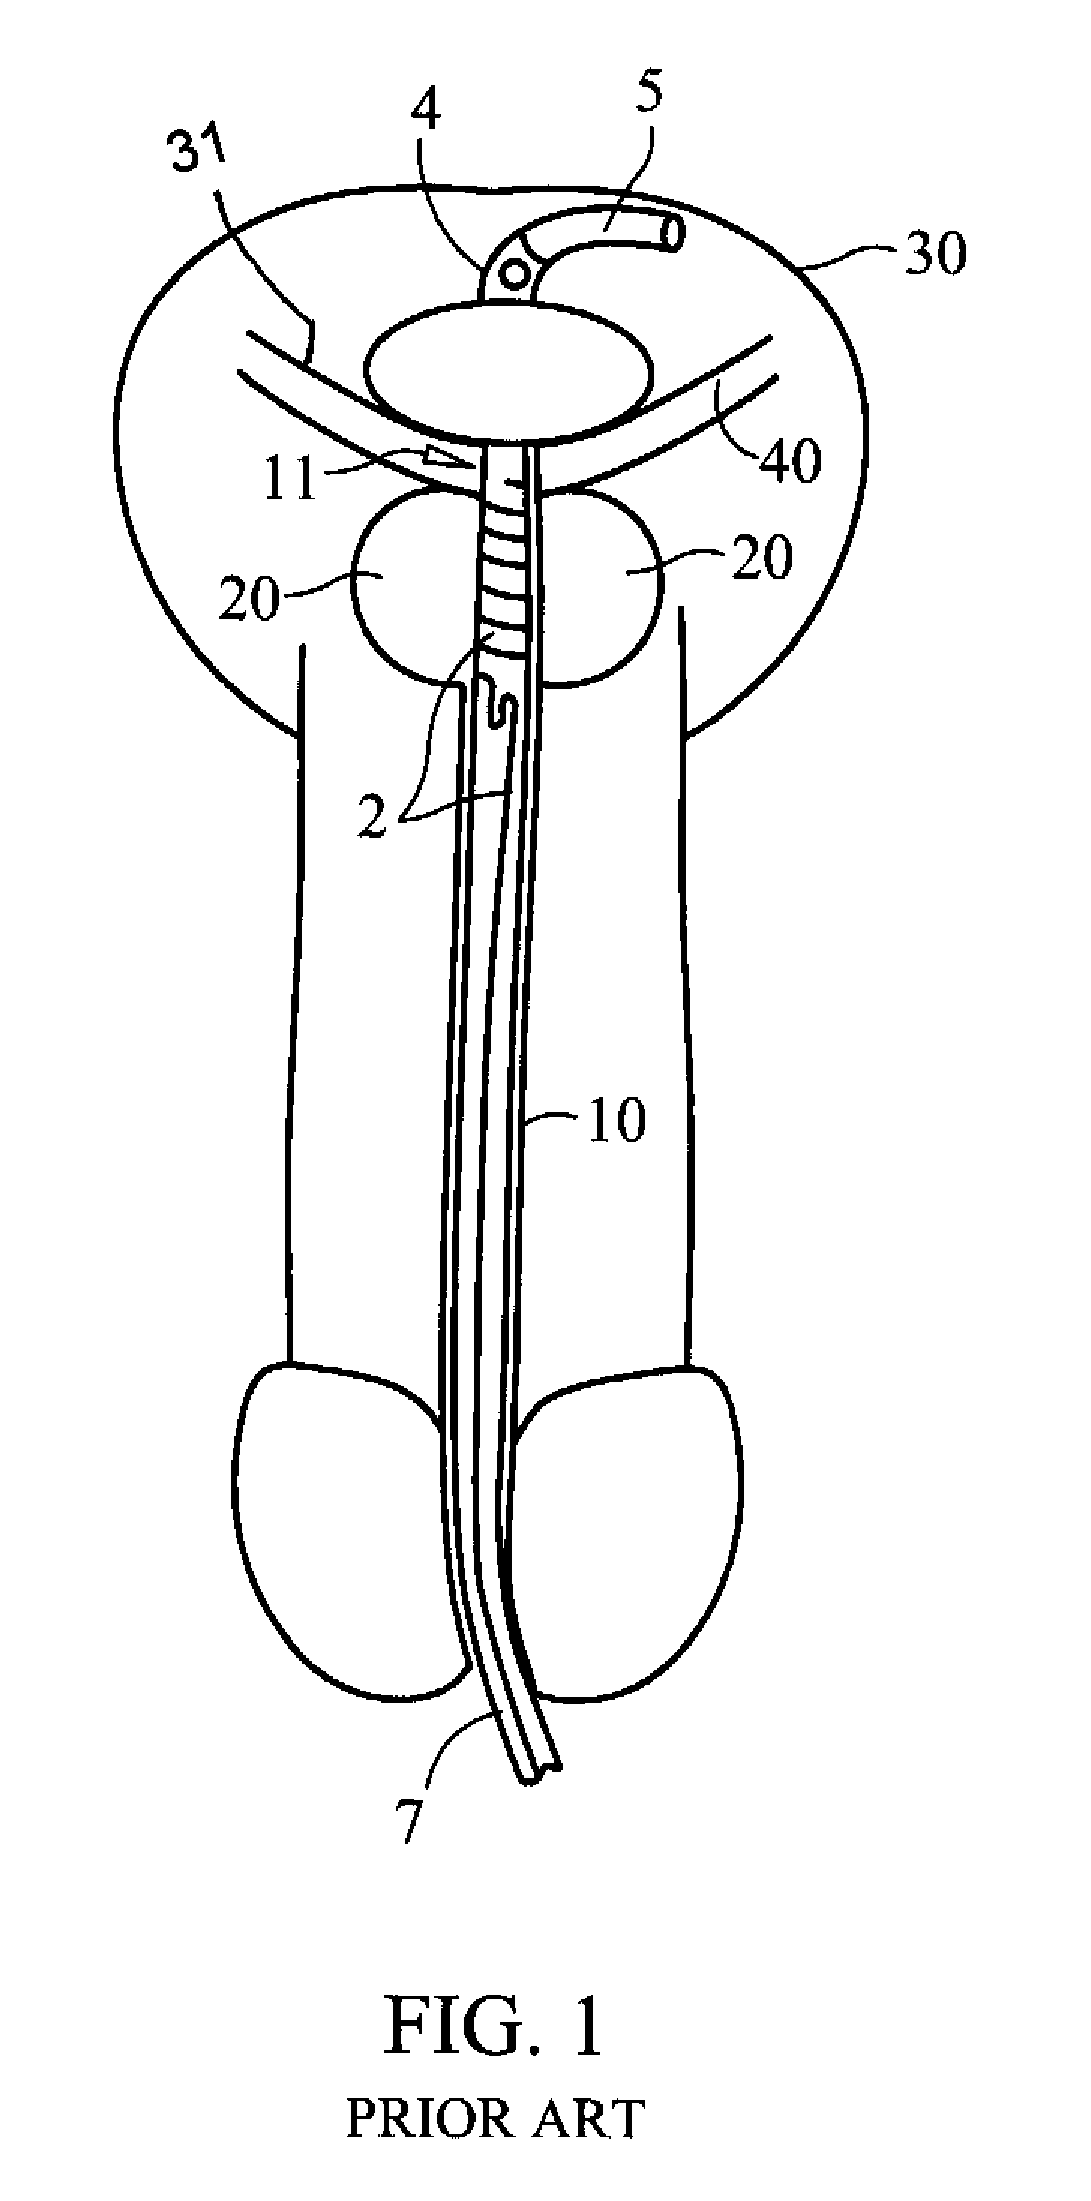 Illuminating balloon catheter and method for using the catheter